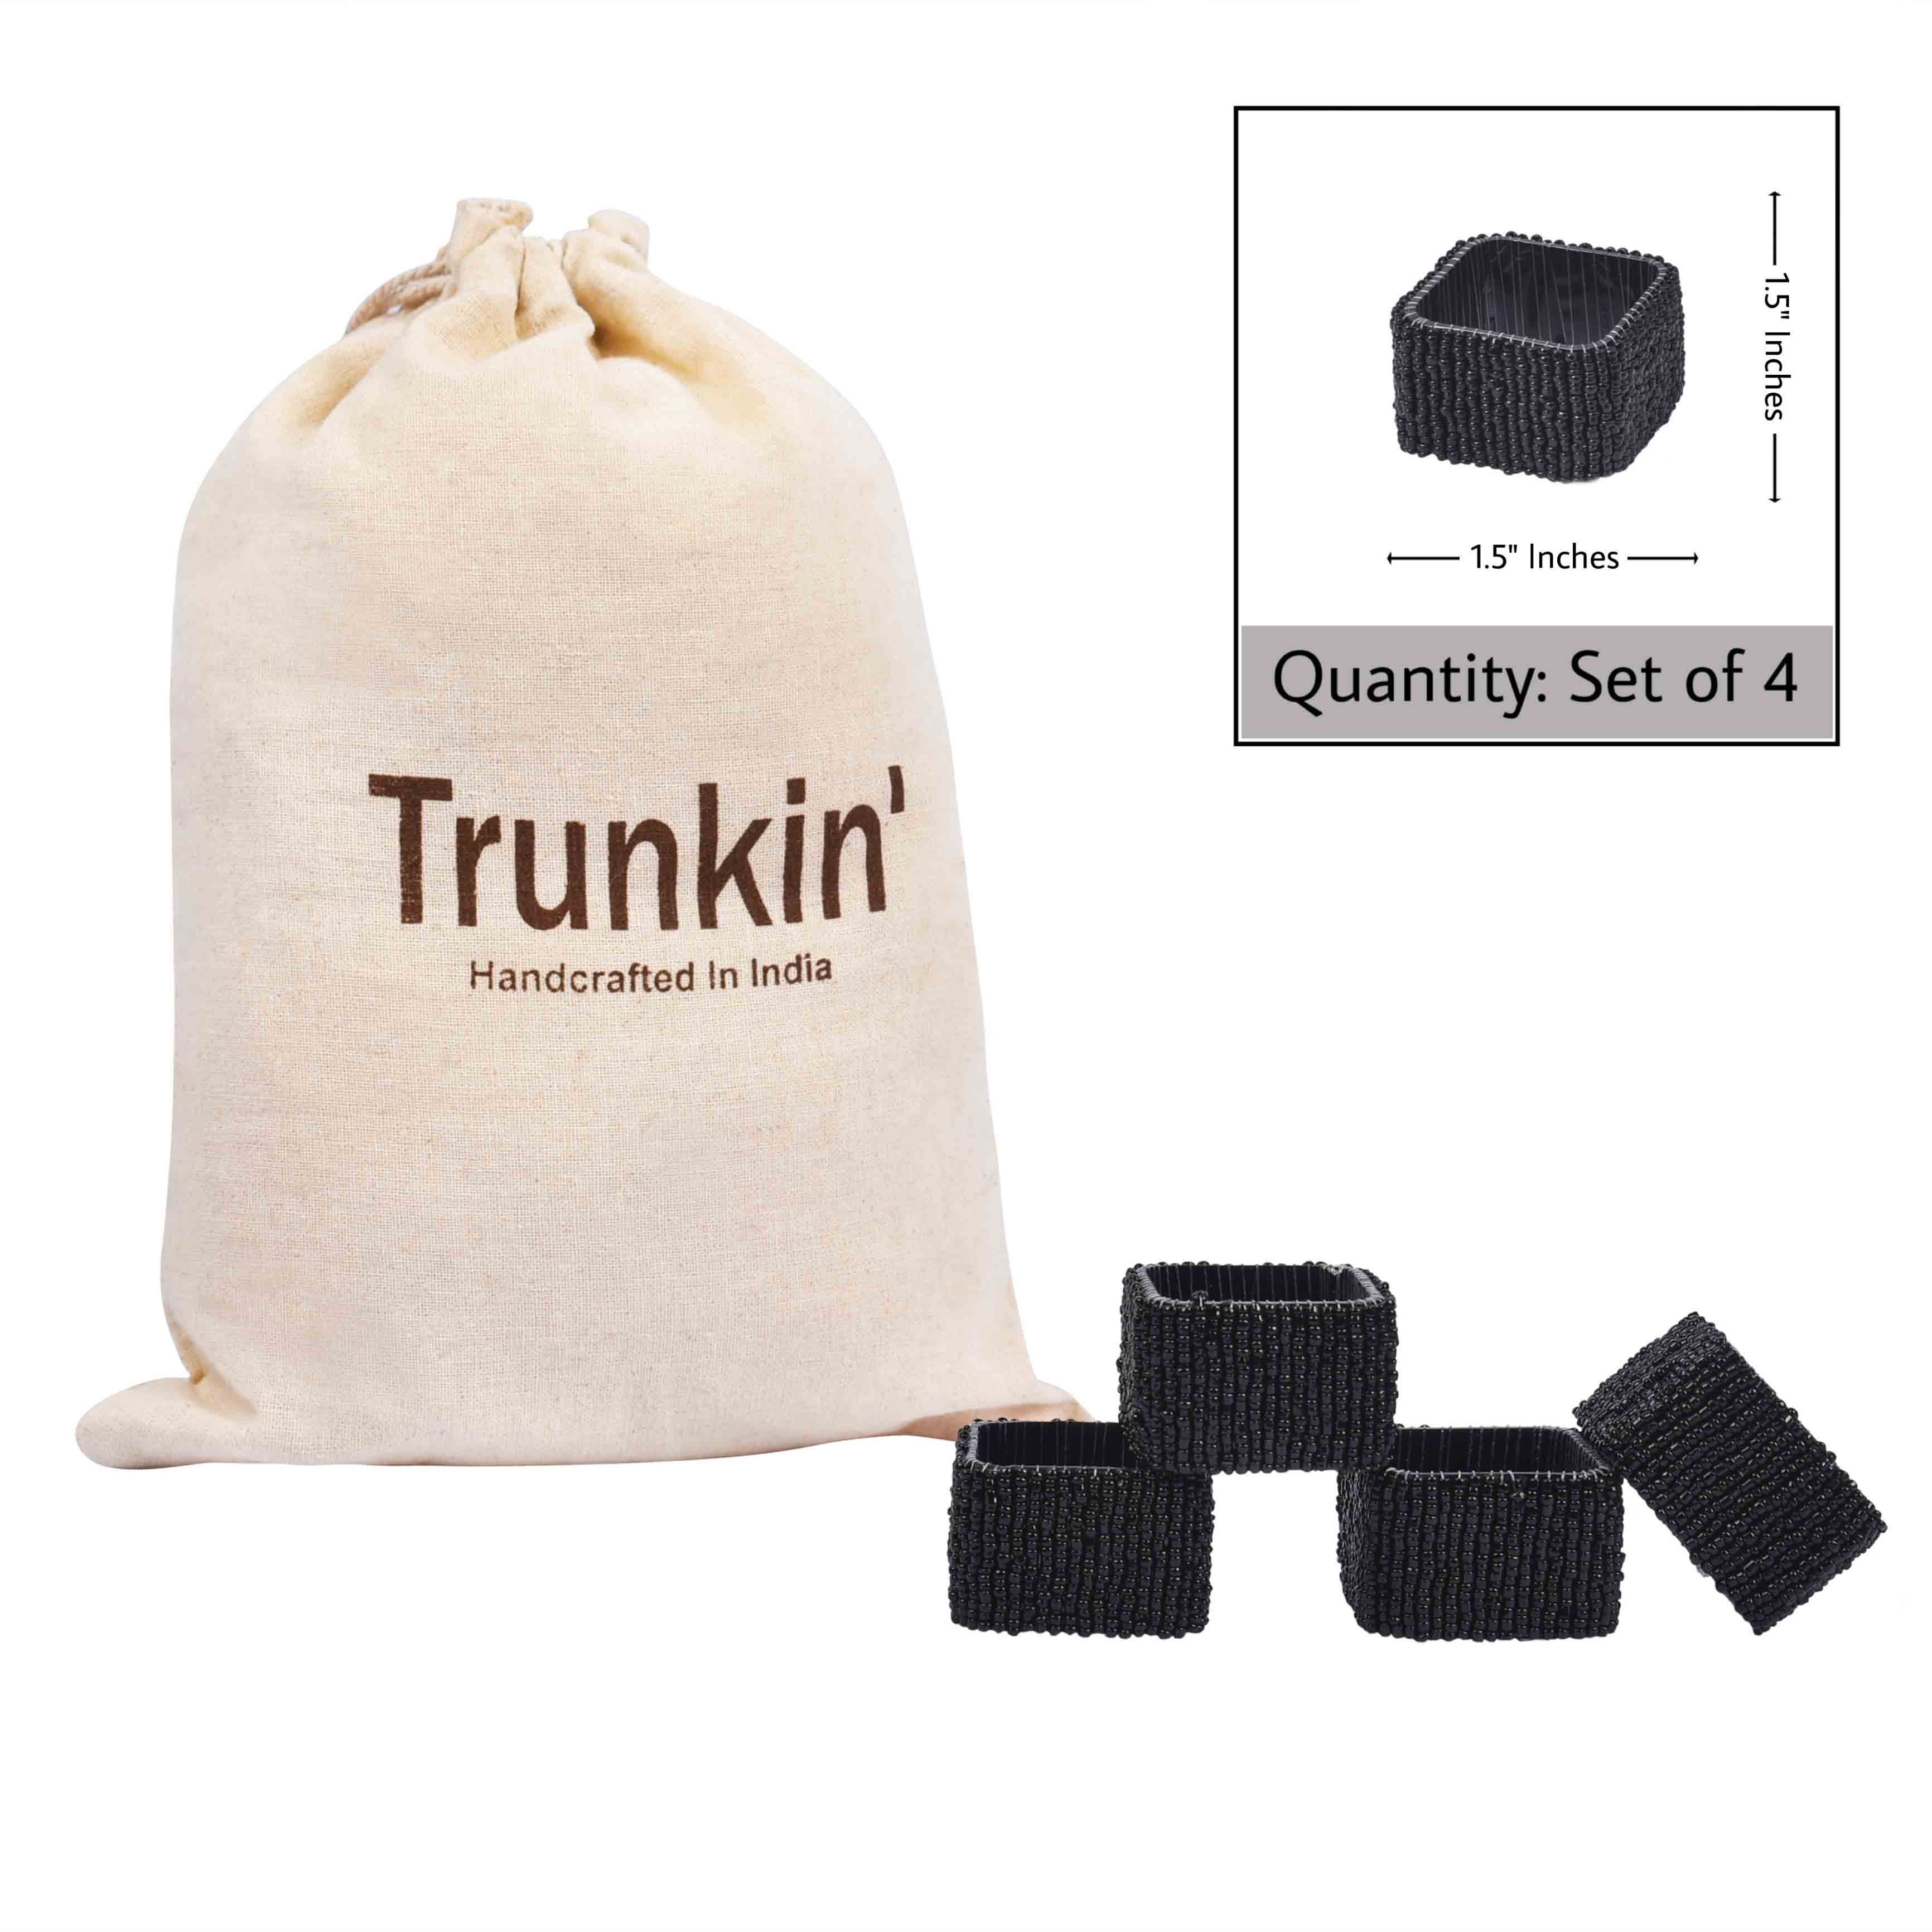 Classic Square Napkin Ring in Black, Set of 4